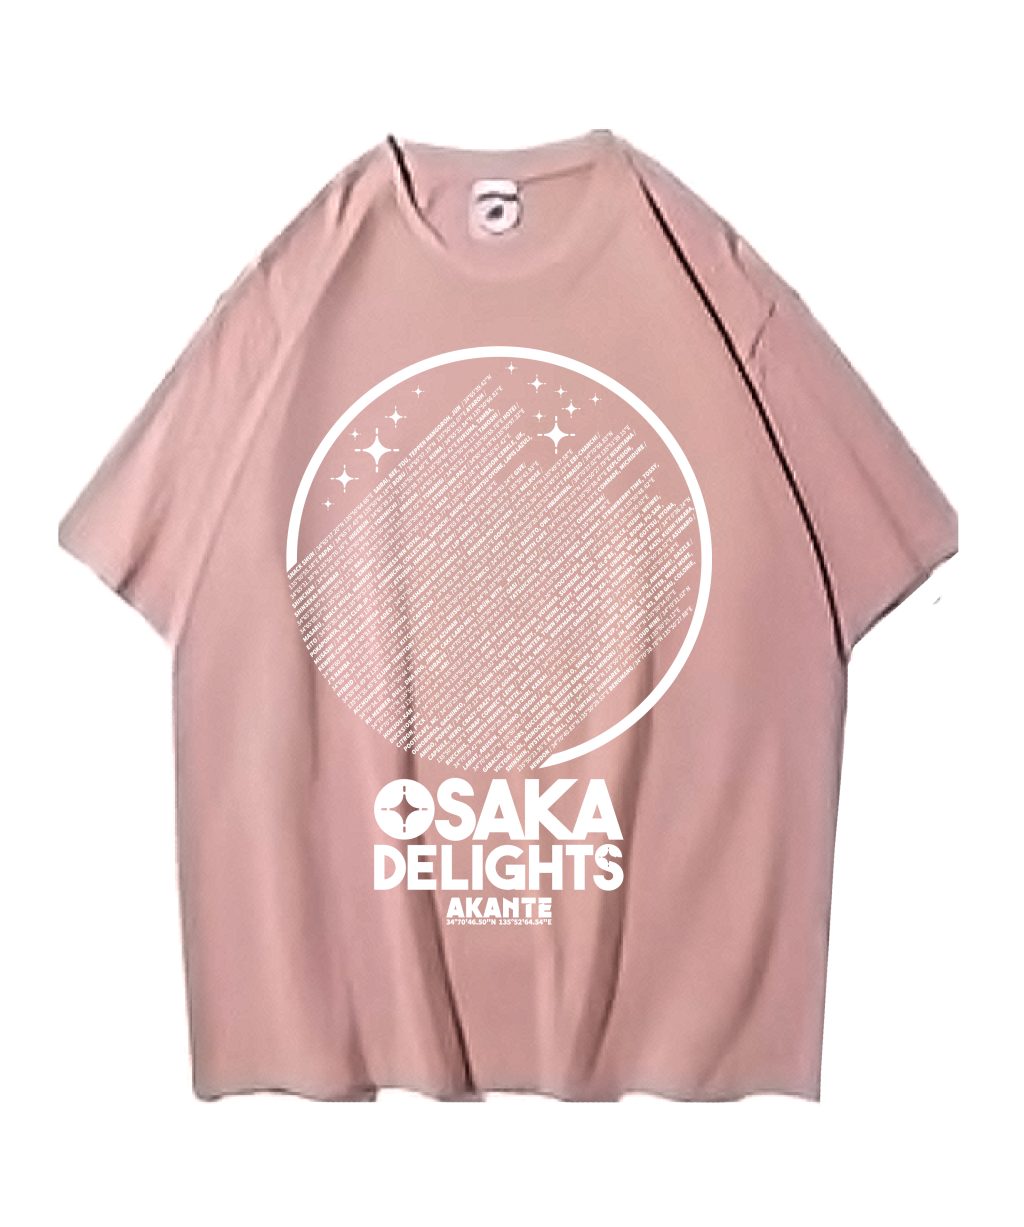 OSAKA DELIGHTS Tシャツ ダスティー・ピンクxホワイト